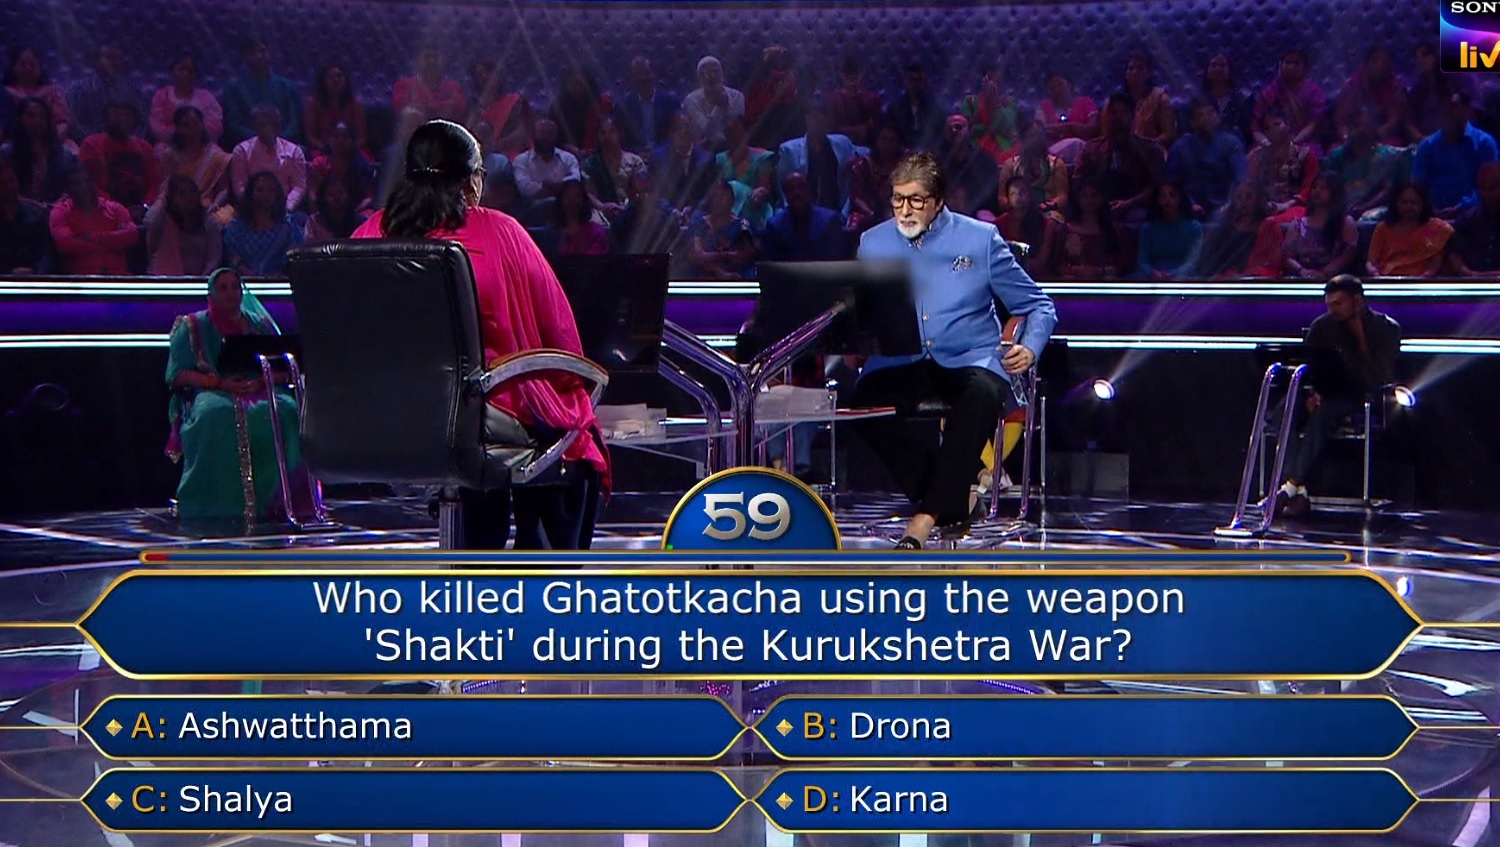 Ques : Who killed Ghatotkacha using the weapon ‘Shakti’ during the Kurukshetra War?